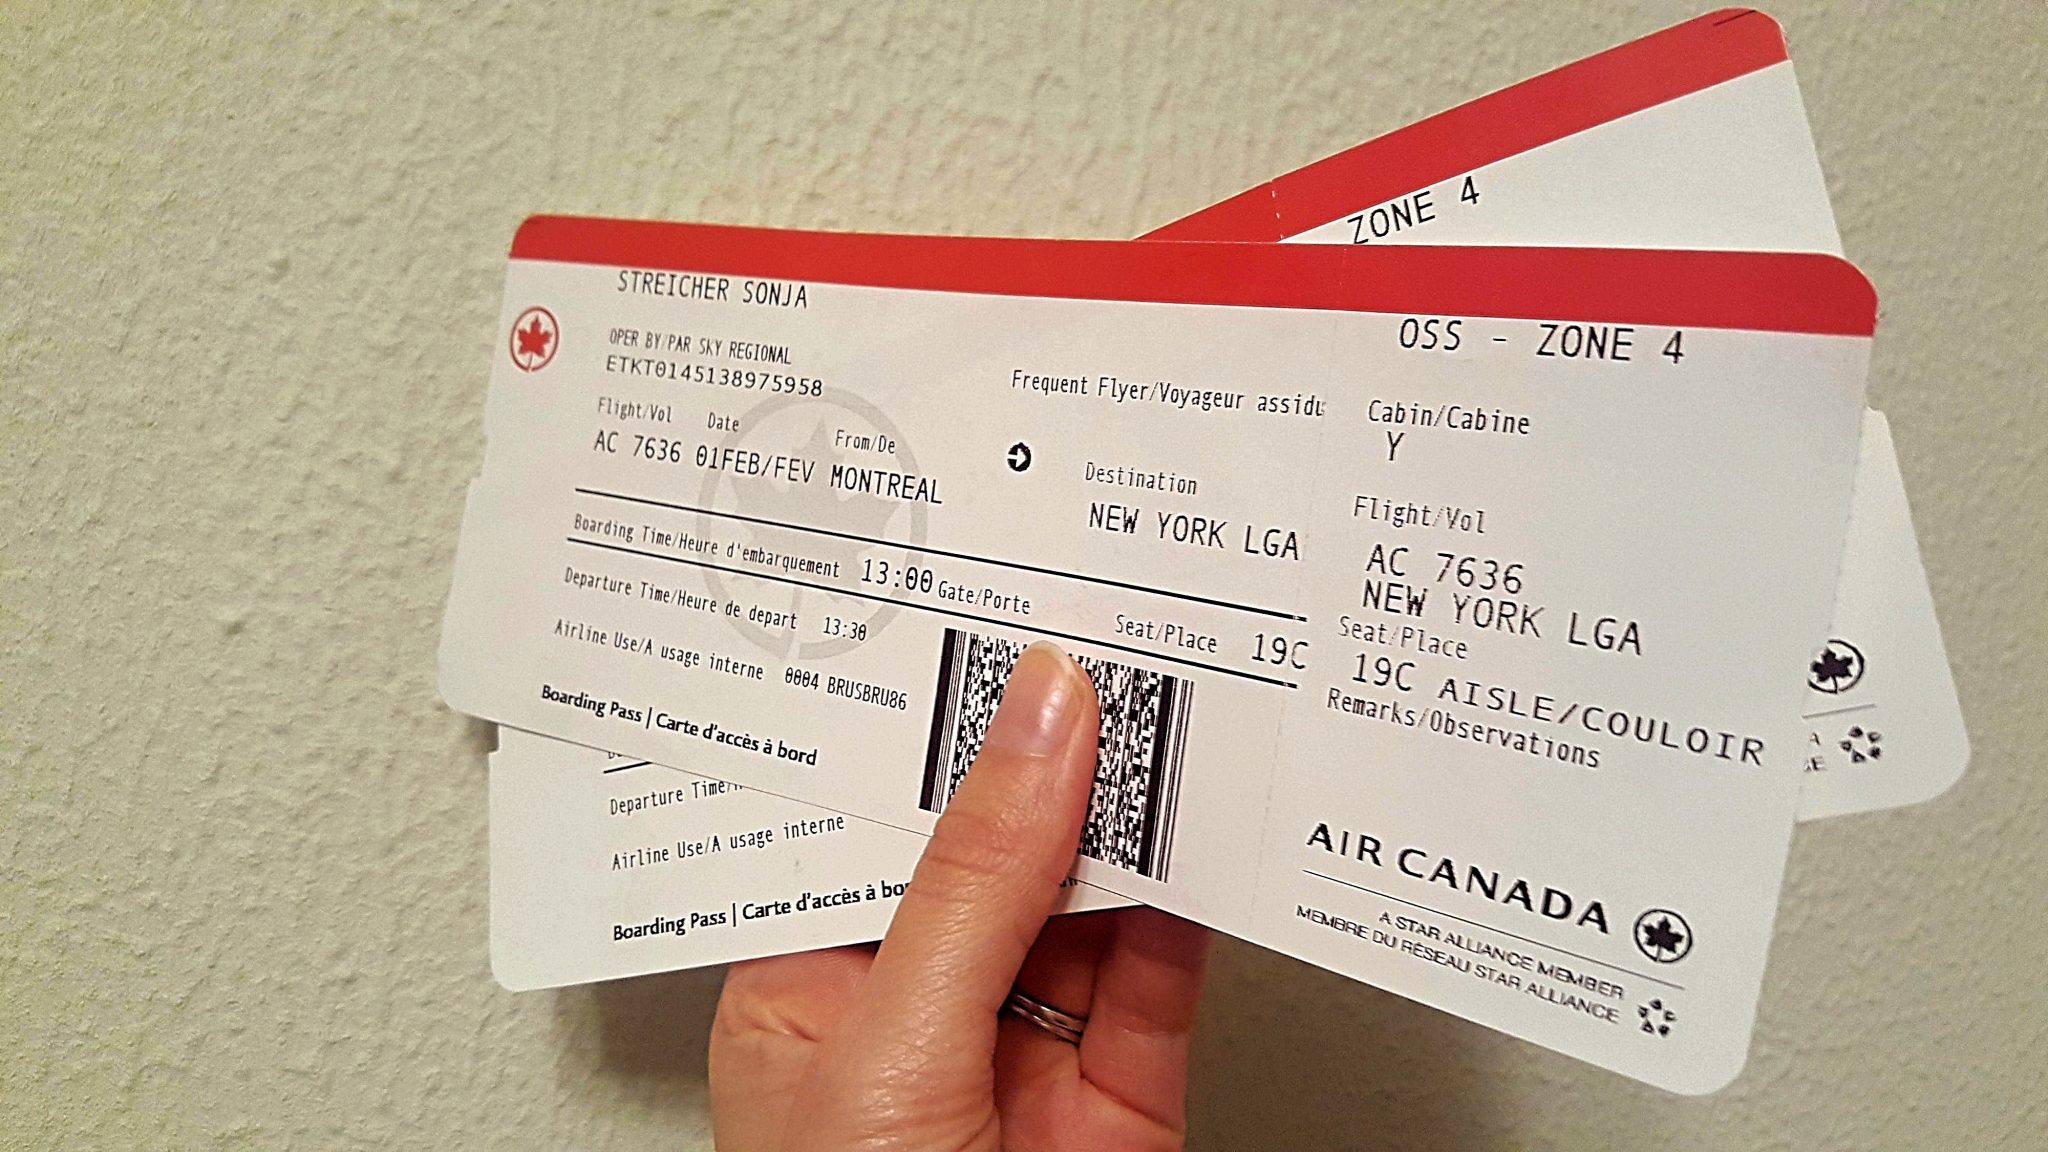 Аир билет на самолет. Билет на самолет Air Canada. Билет в Канаду. Канада билеты на самолет. Билет ticket.